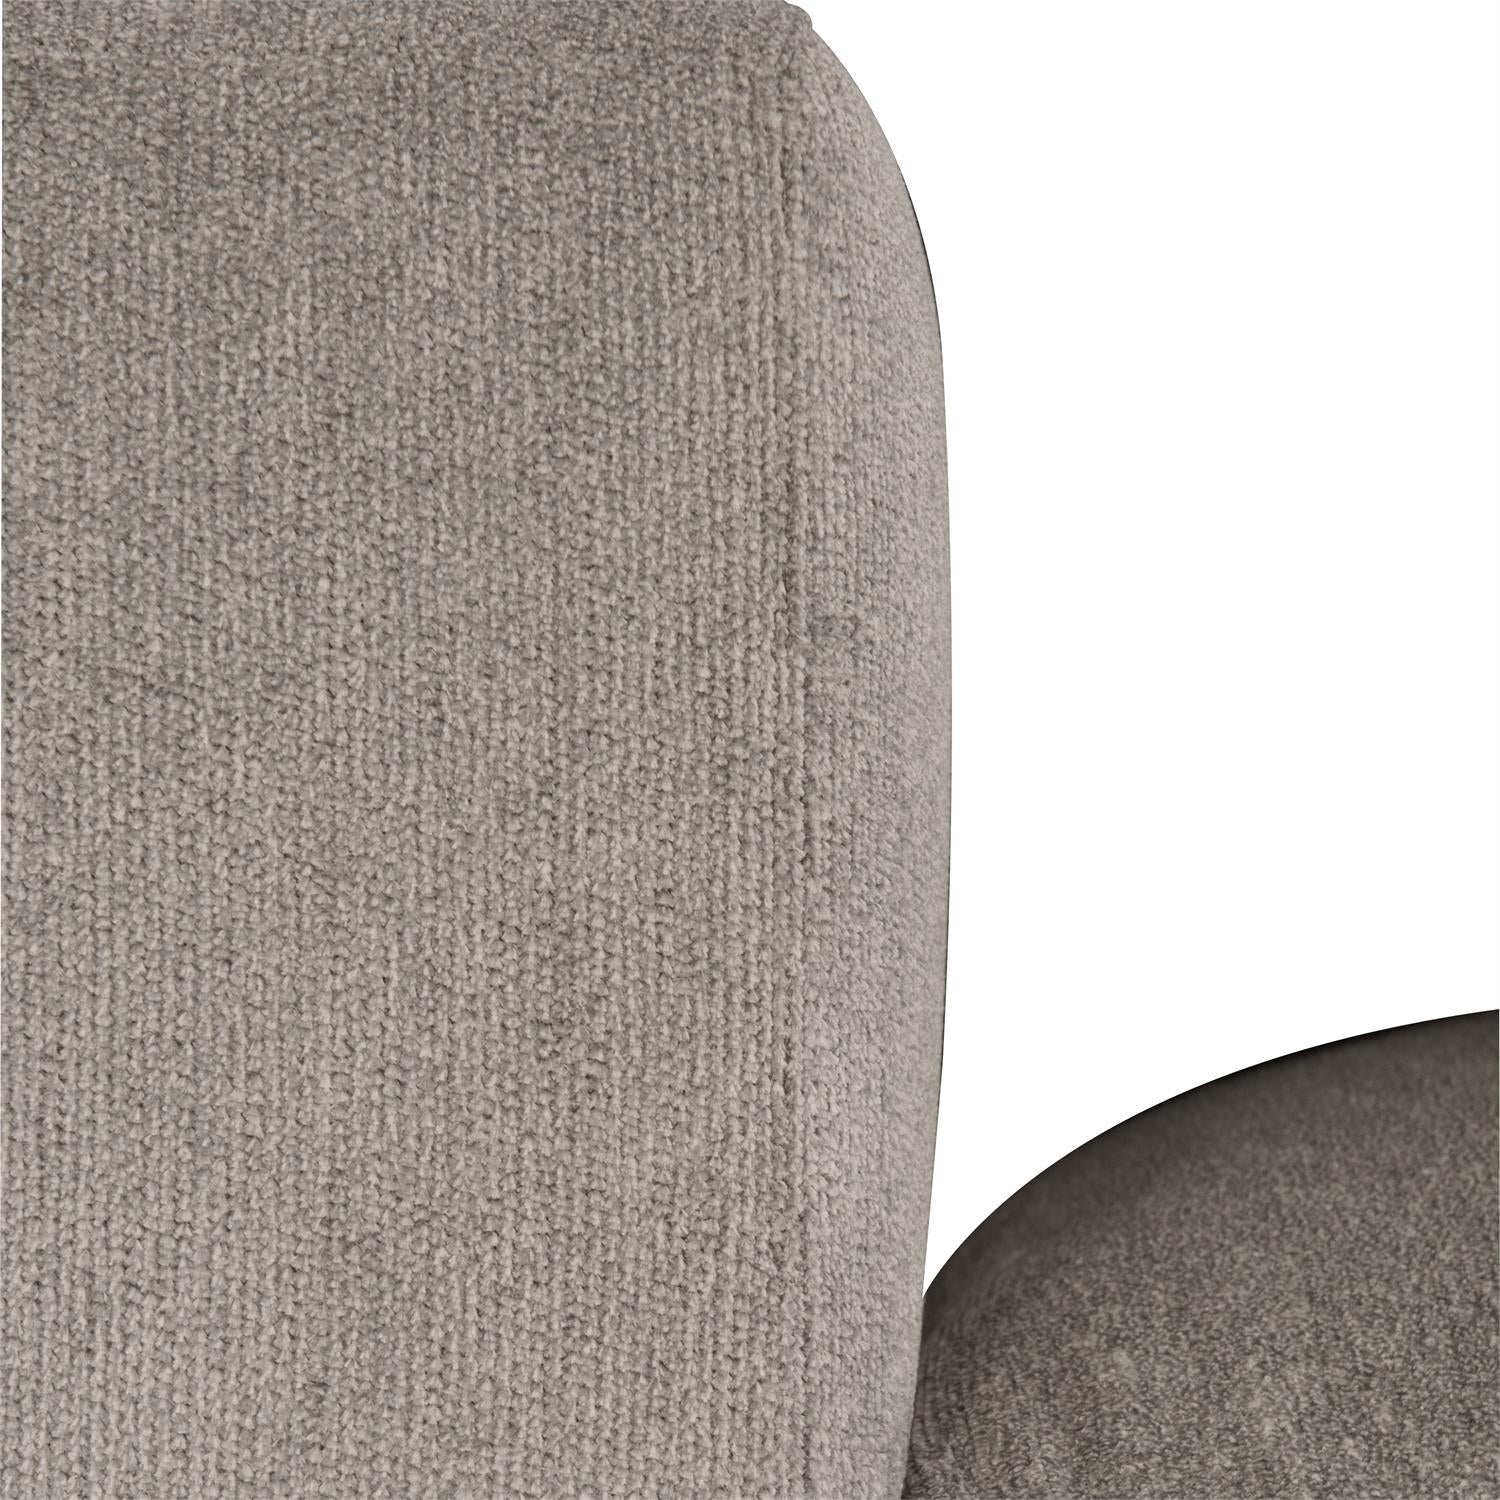 1053-011 Fabric with 789 Portobello Finish Wood | Bernhardt Noel Fabric Sofa | Valley Ridge Furniture